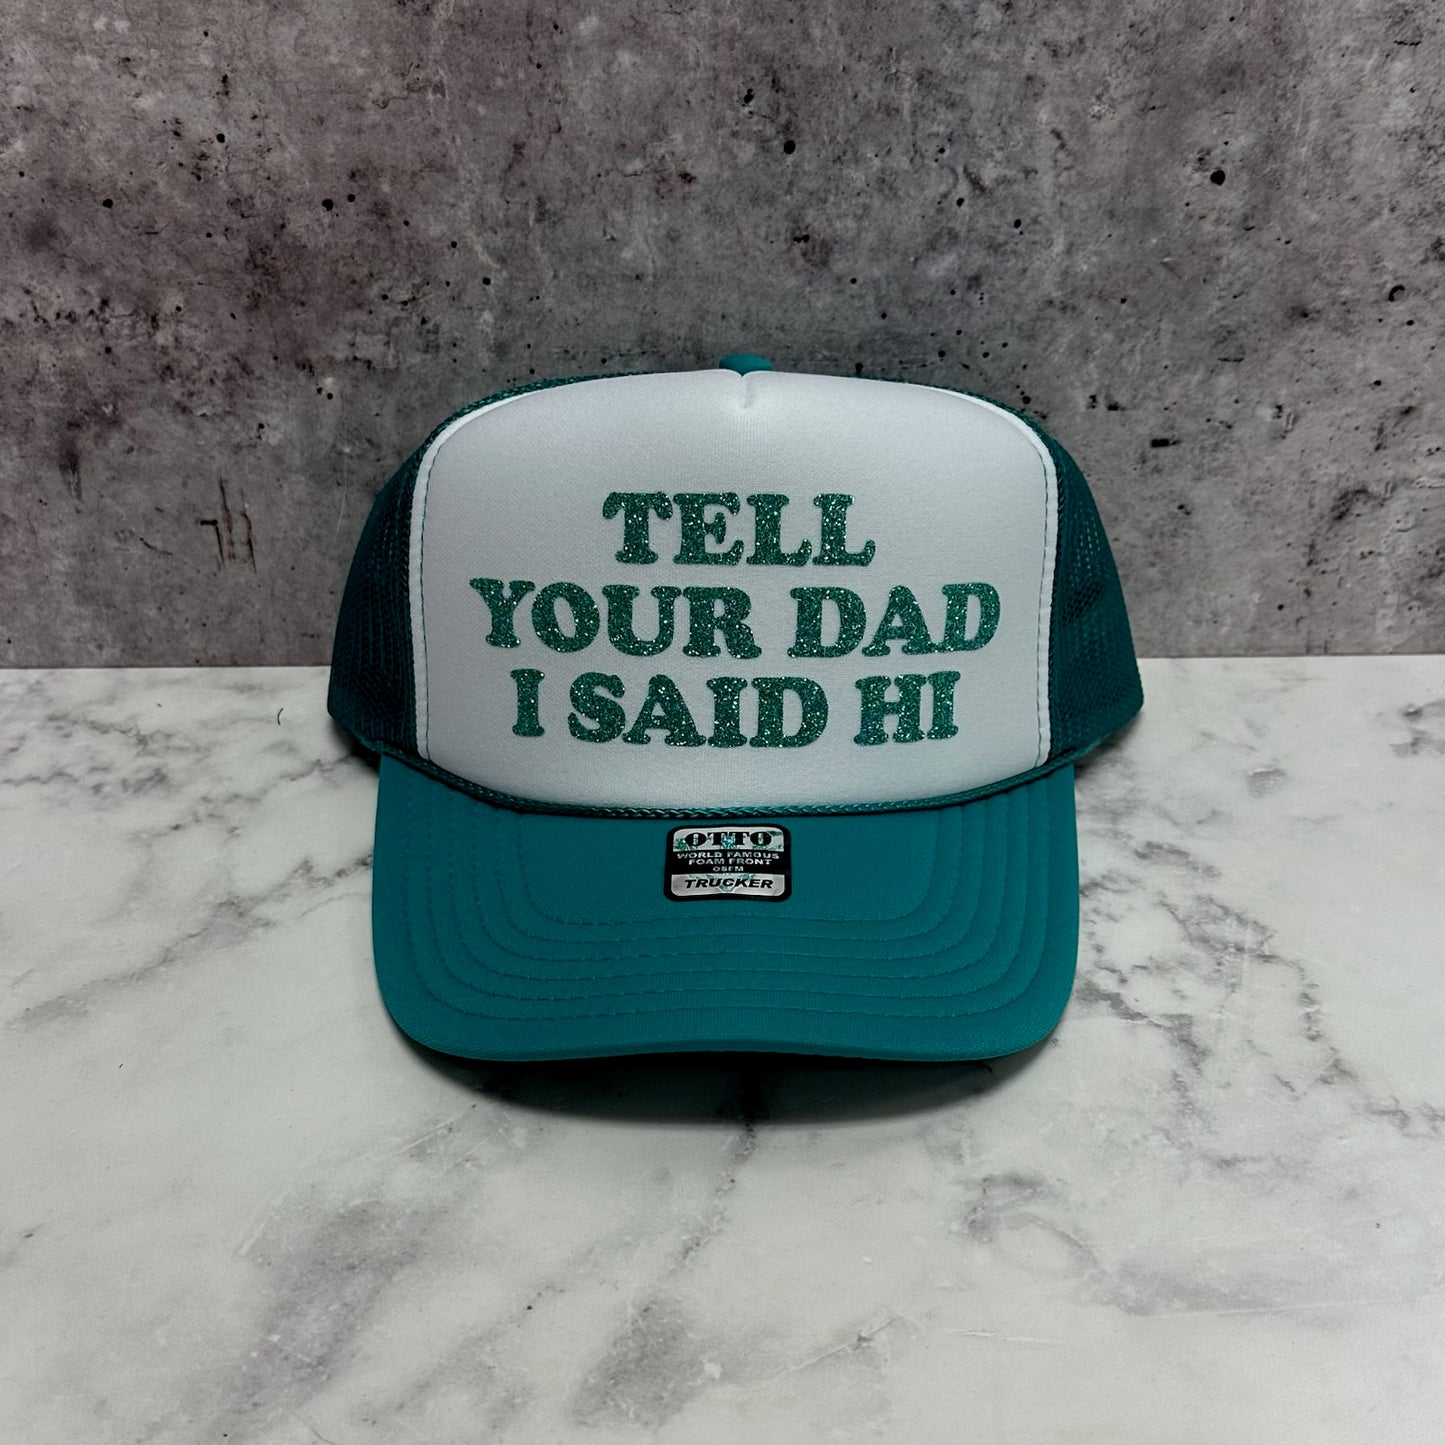 Tell Your Dad I said Hi Trucker Hat